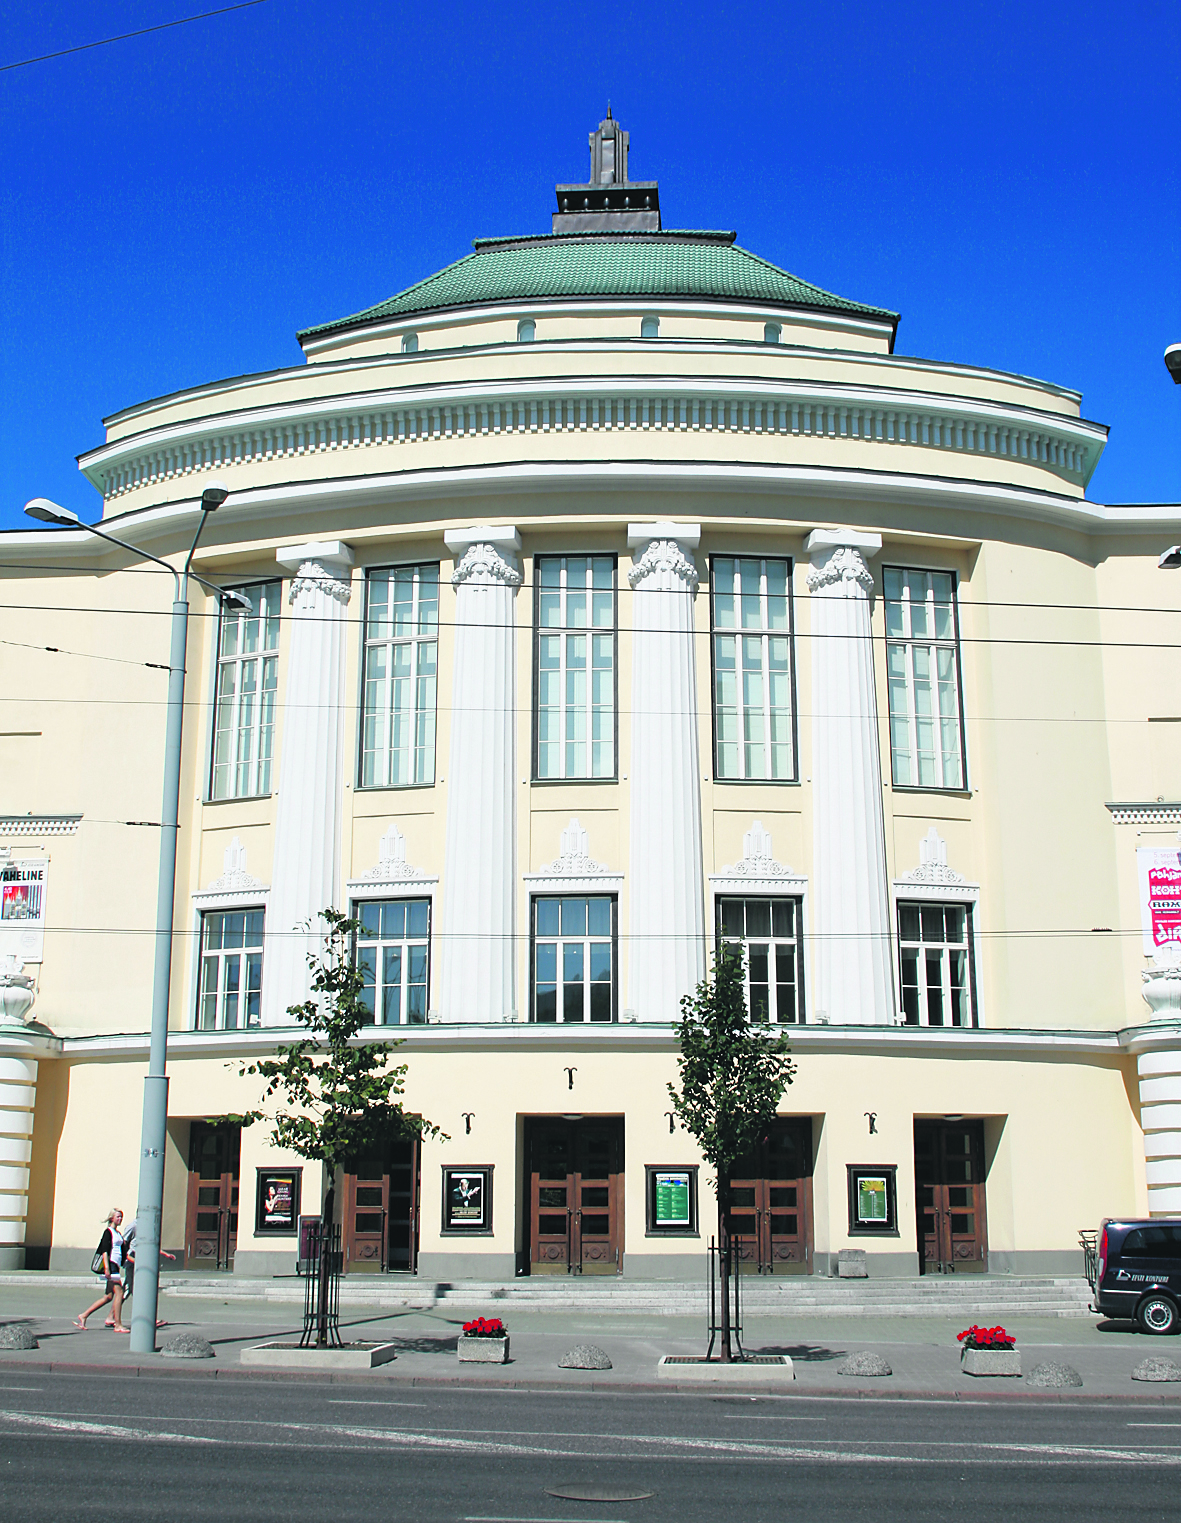 Celebrating 107 years of opera in Estonia